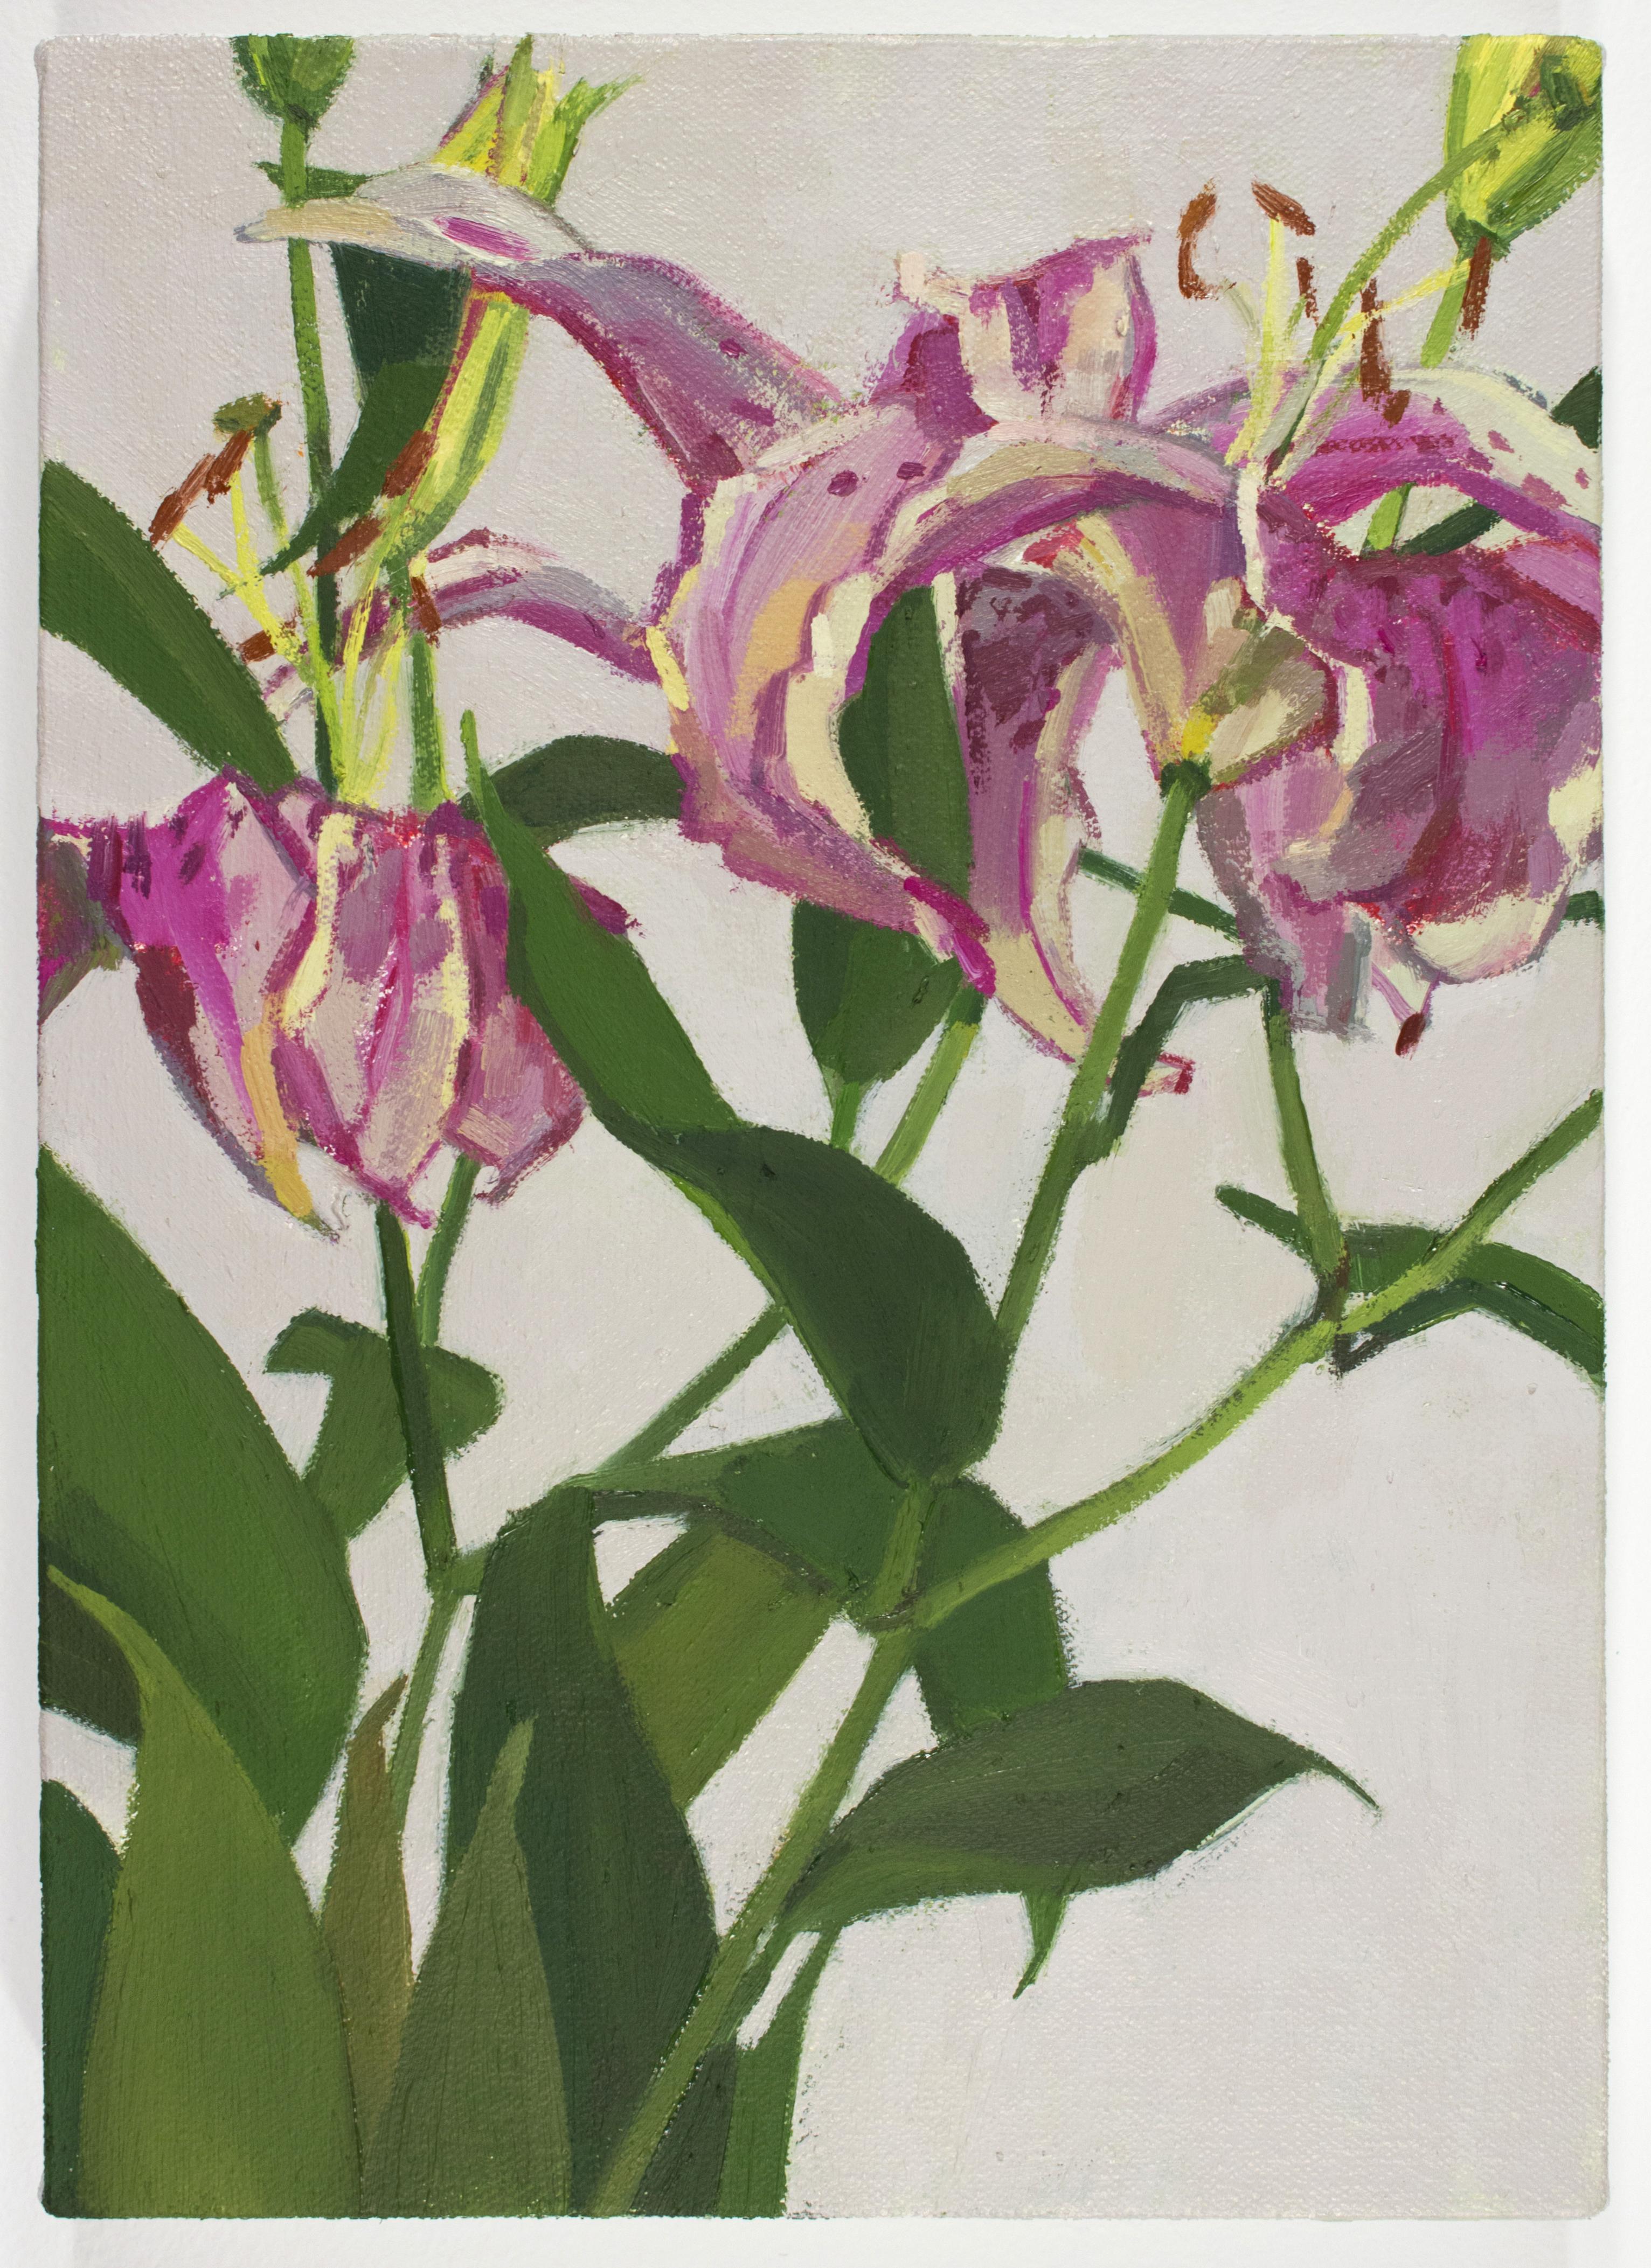 'Blushing Lilies' - still life - floral, botanical, pink, impressionism - Painting by Christina Renfer Vogel